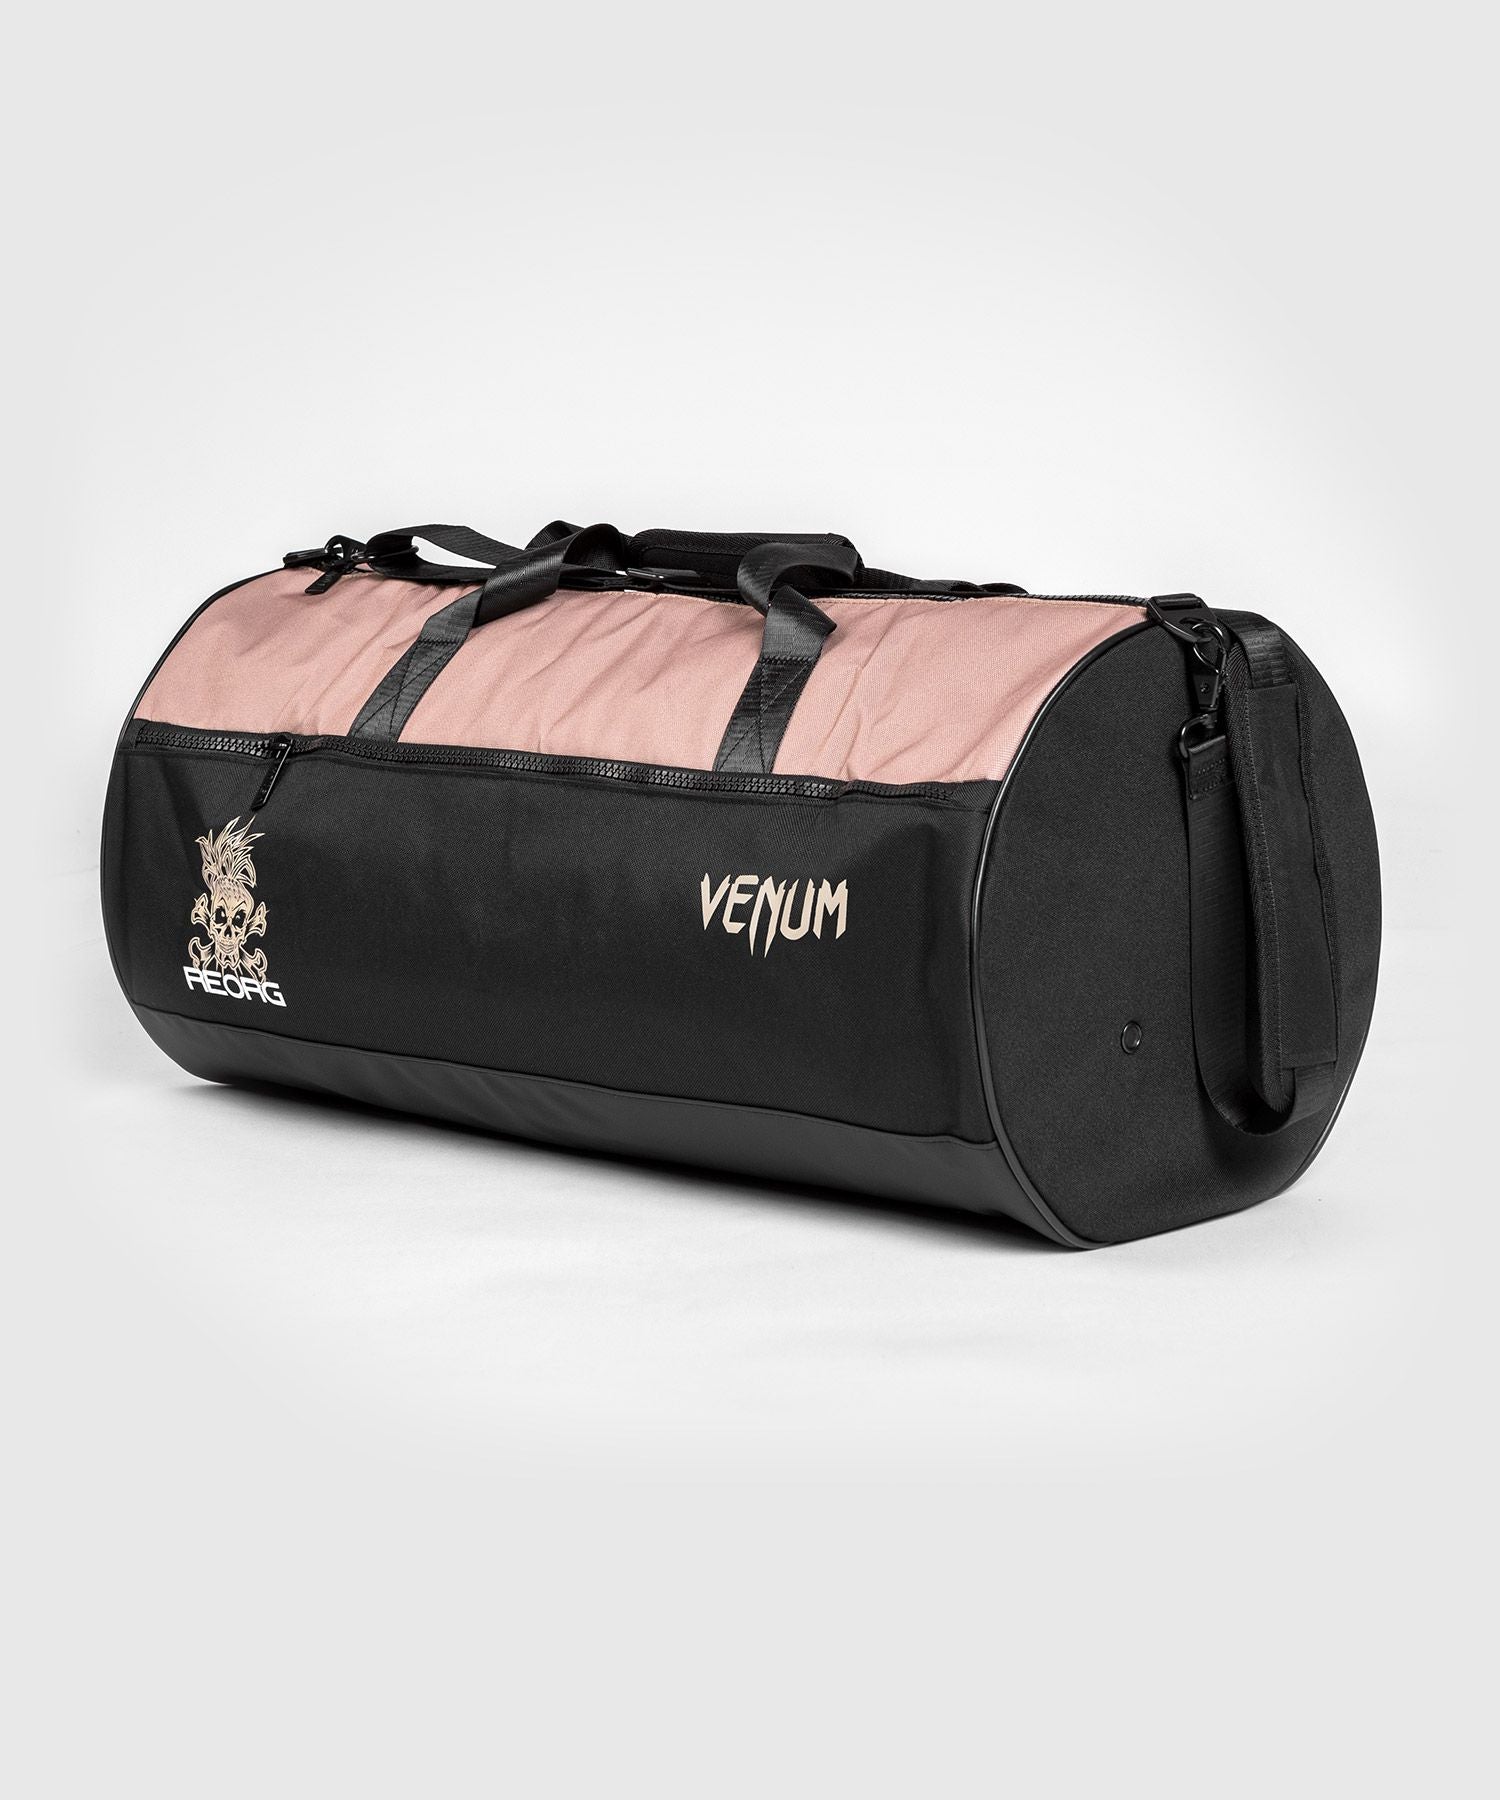 Venum REORG Combat Sports Equipment Bag - Budo Online